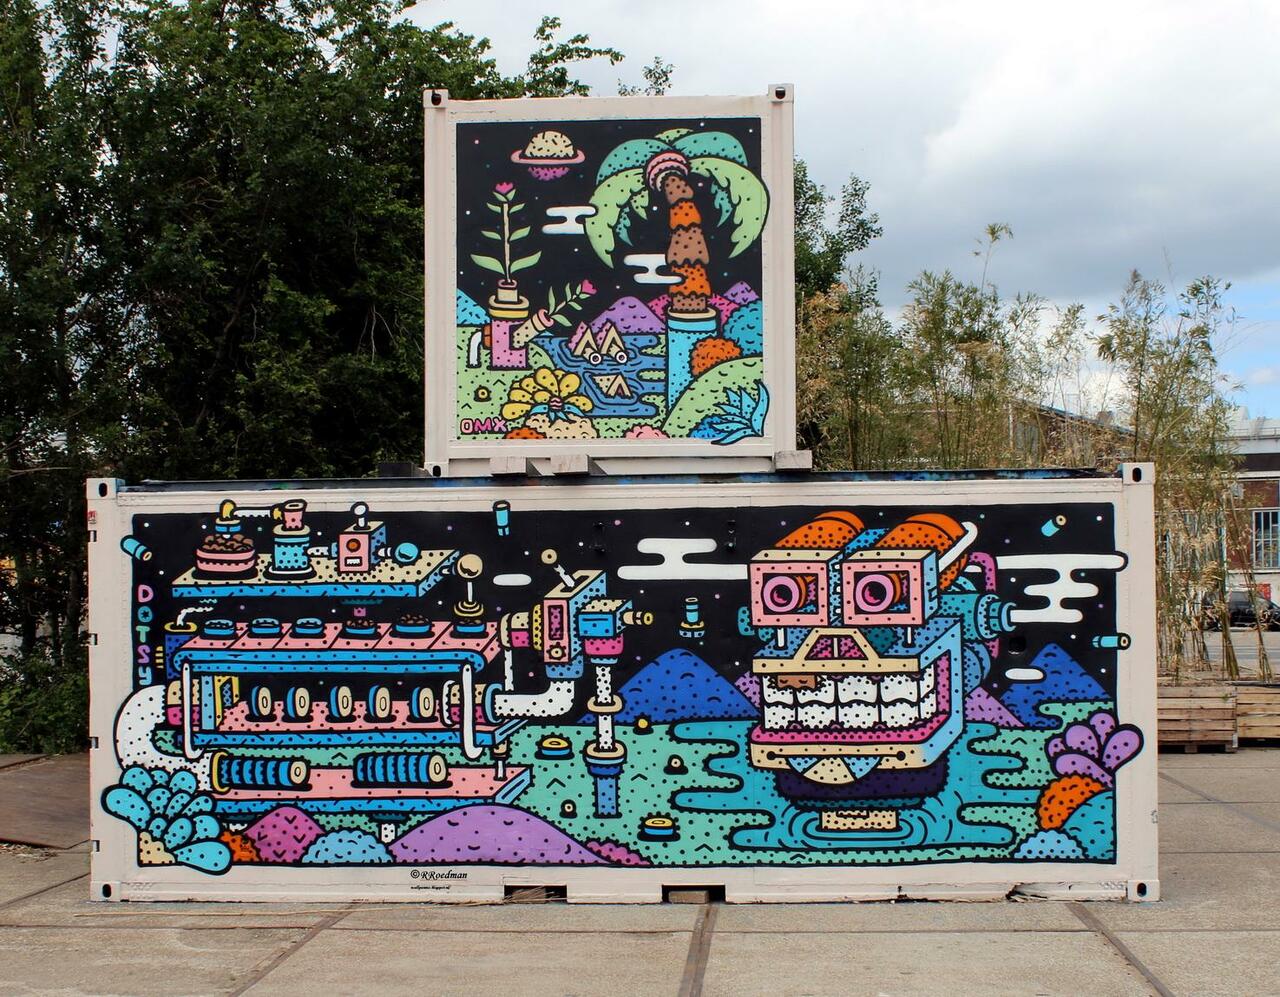 RT @RRoedman: #streetart #graffiti #mural #Dotsy in #Amsterdam #NDSM  3 pics at  http://wallpaintss.blogspot.nl http://t.co/d6OHLkOEmx